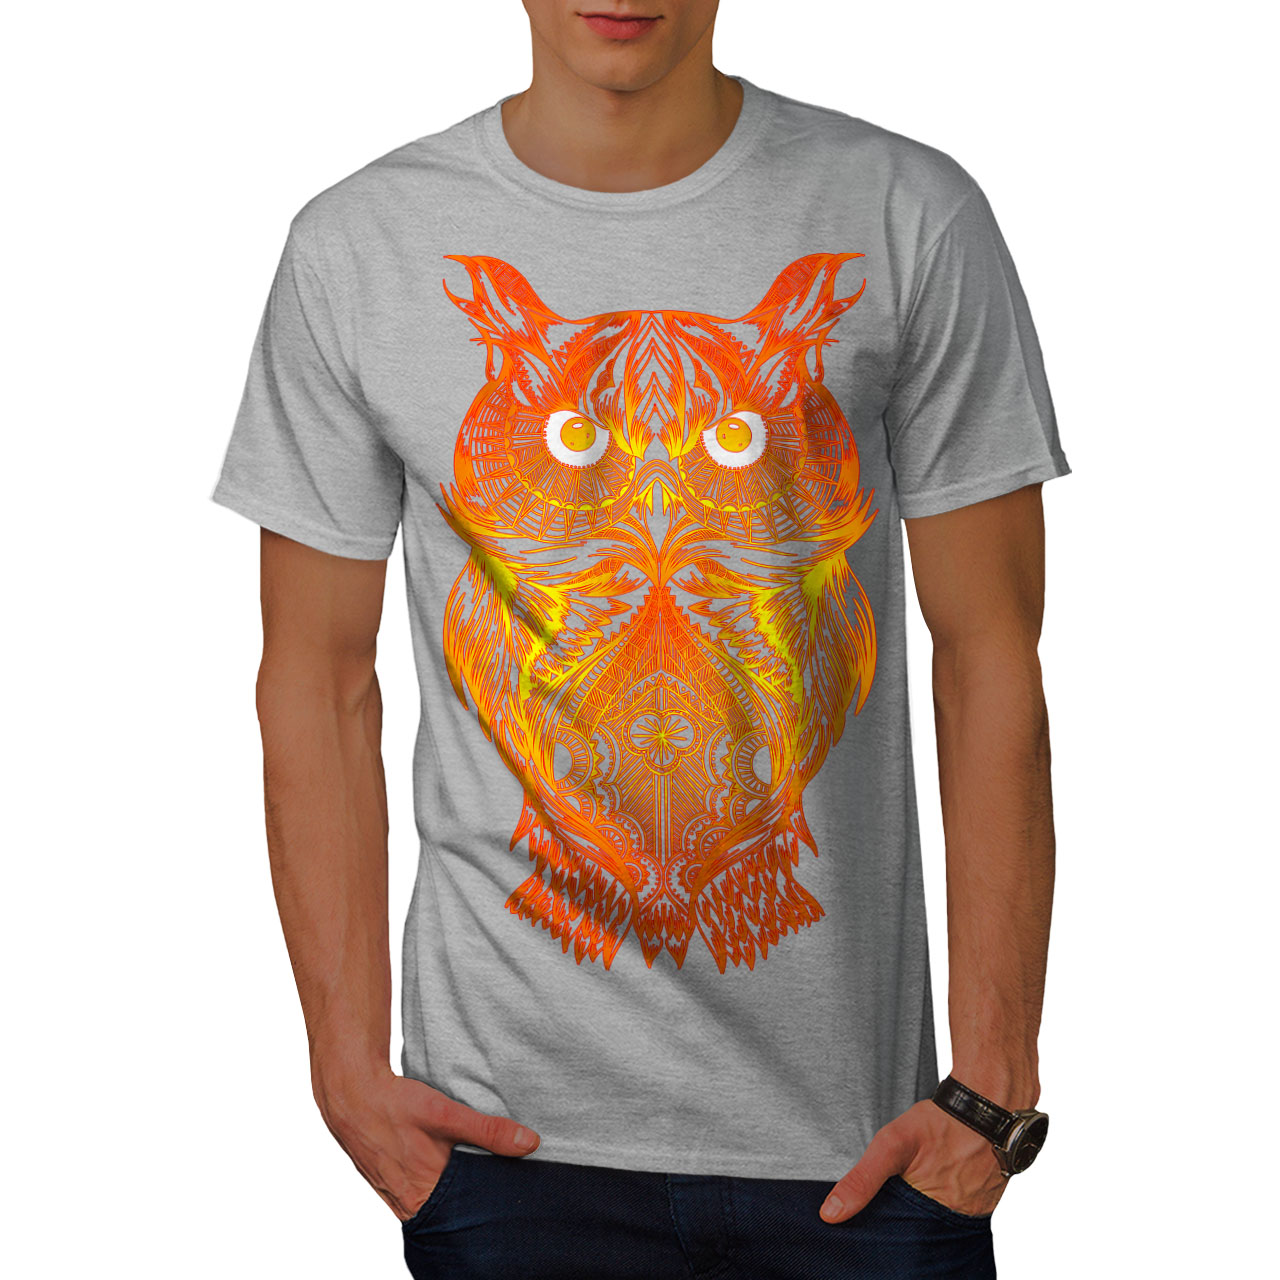 thumbnail 15  - Wellcoda Night Owl On Fire Mens T-shirt, Burning Graphic Design Printed Tee